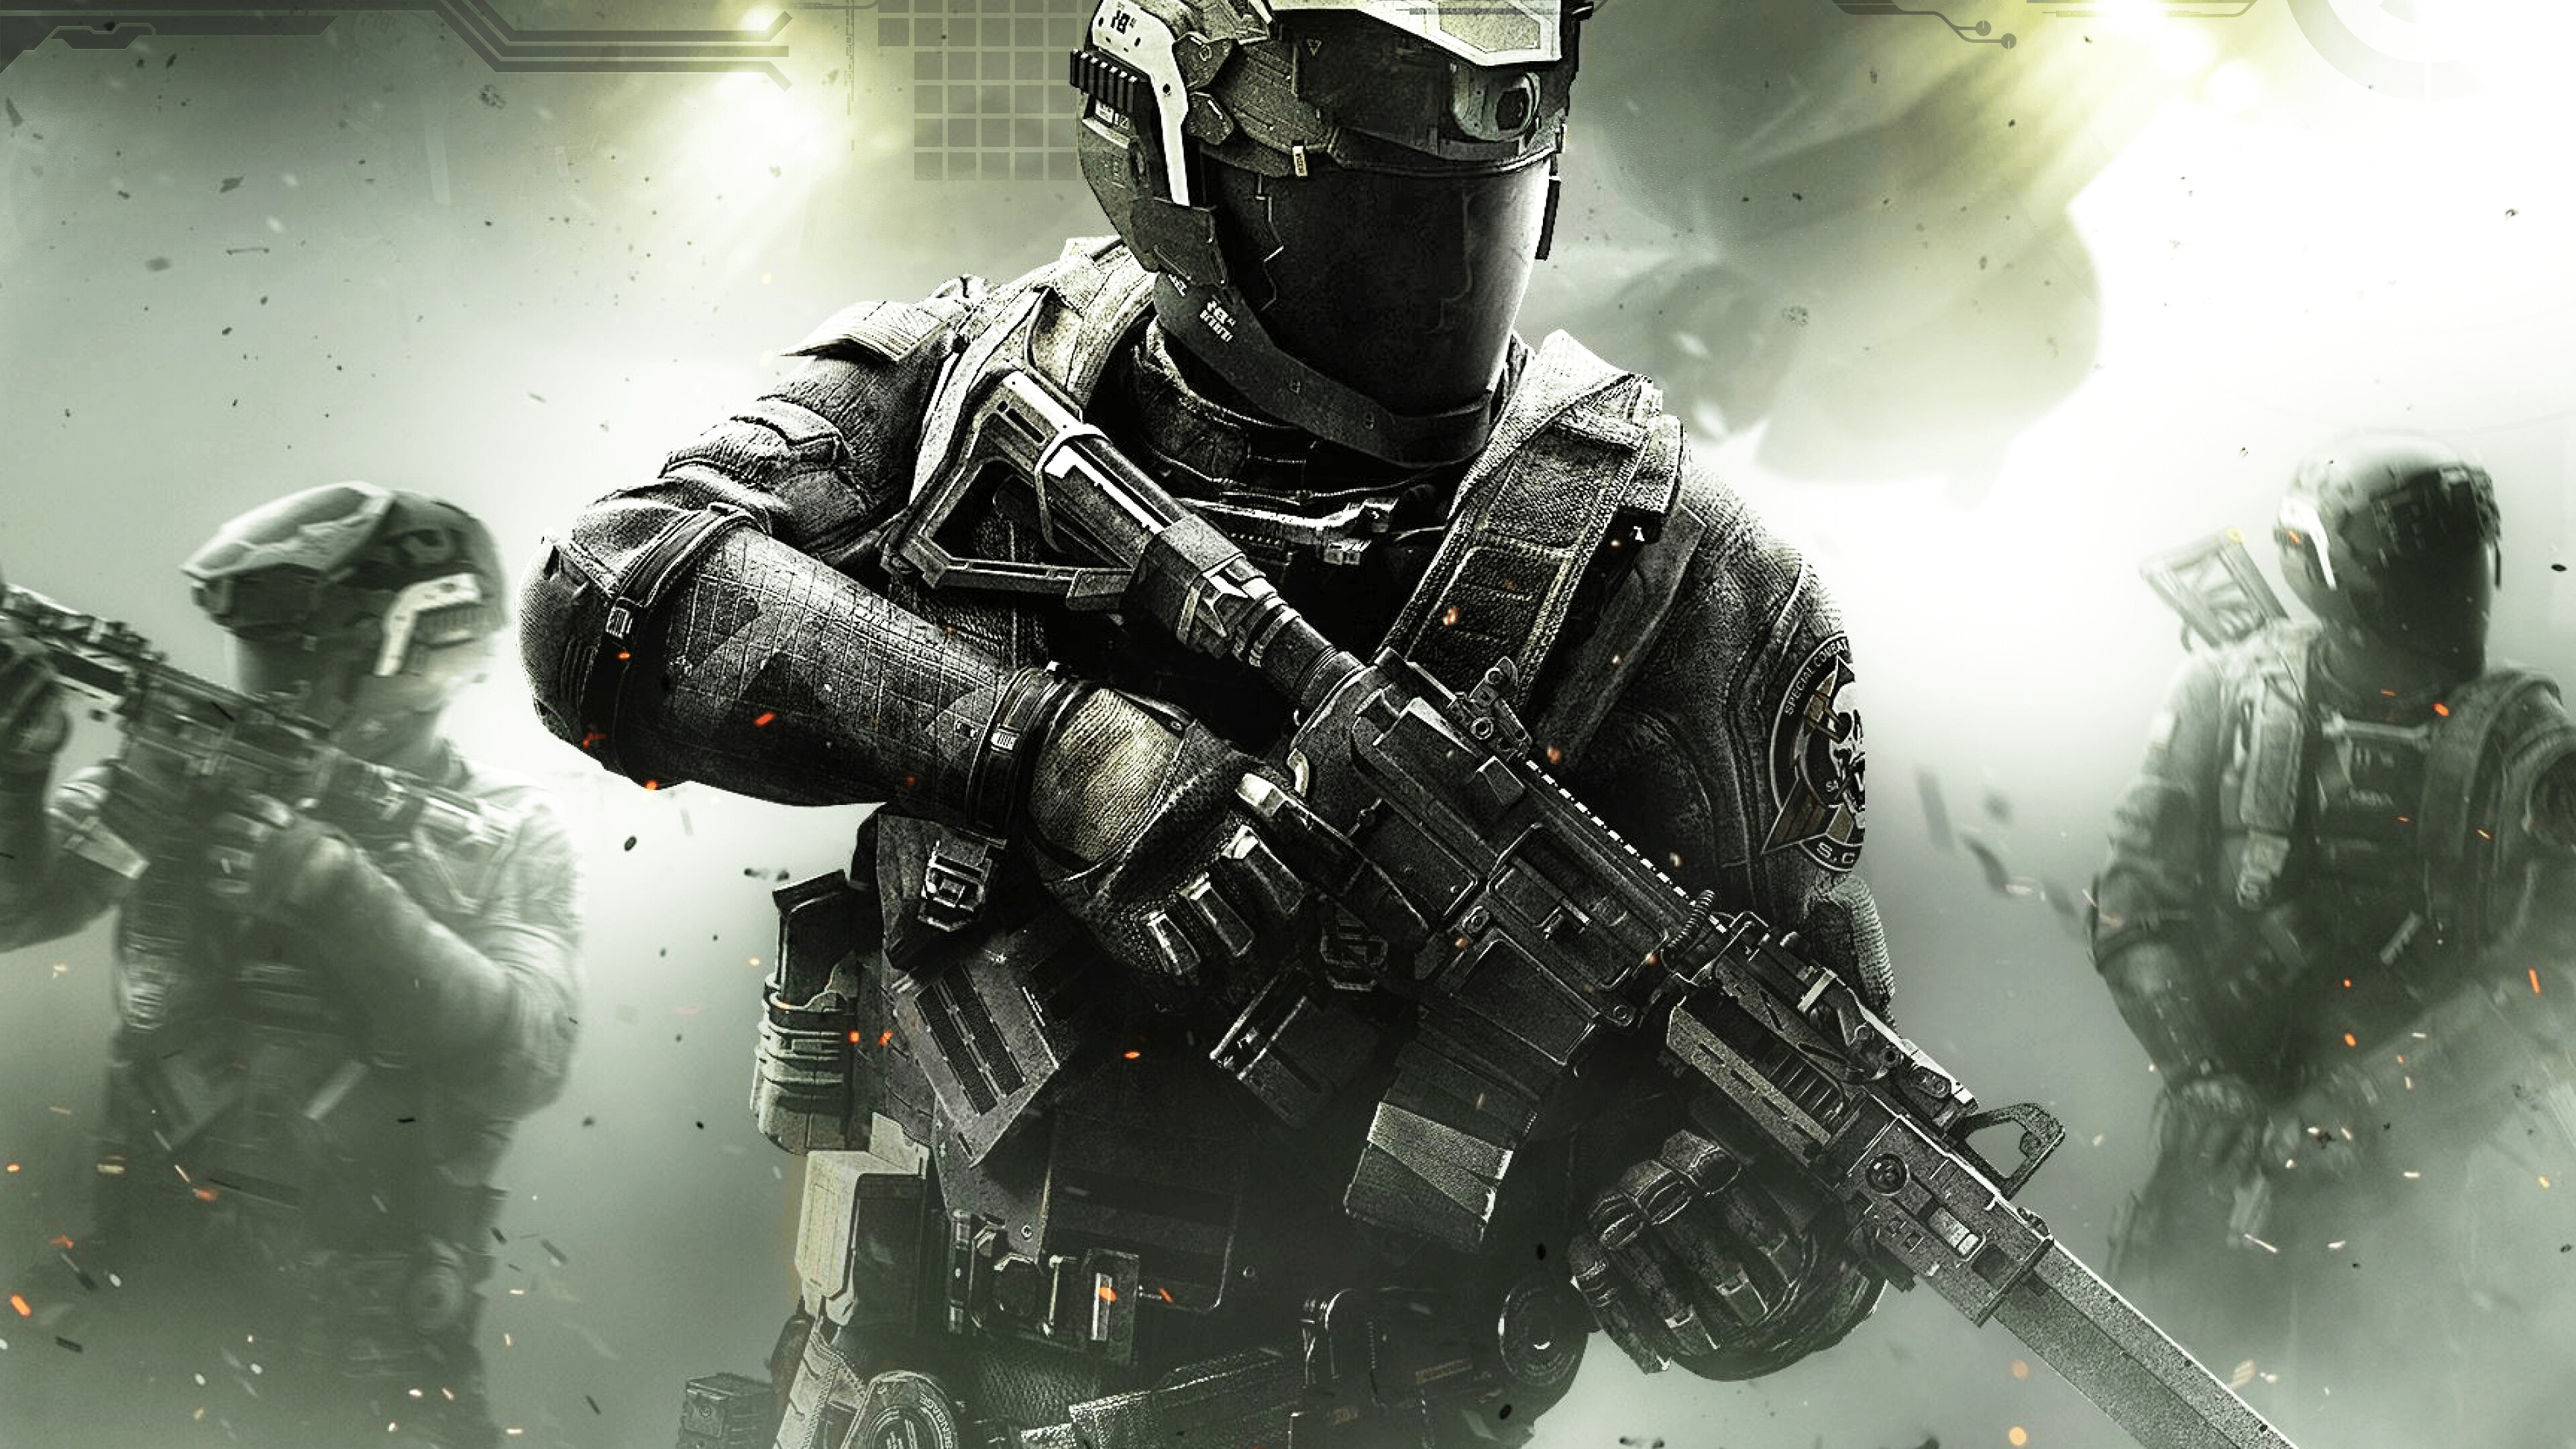 Call of Duty, Striking wallpapers, Powerful weaponry, Intense firefights, 3840x2160 4K Desktop